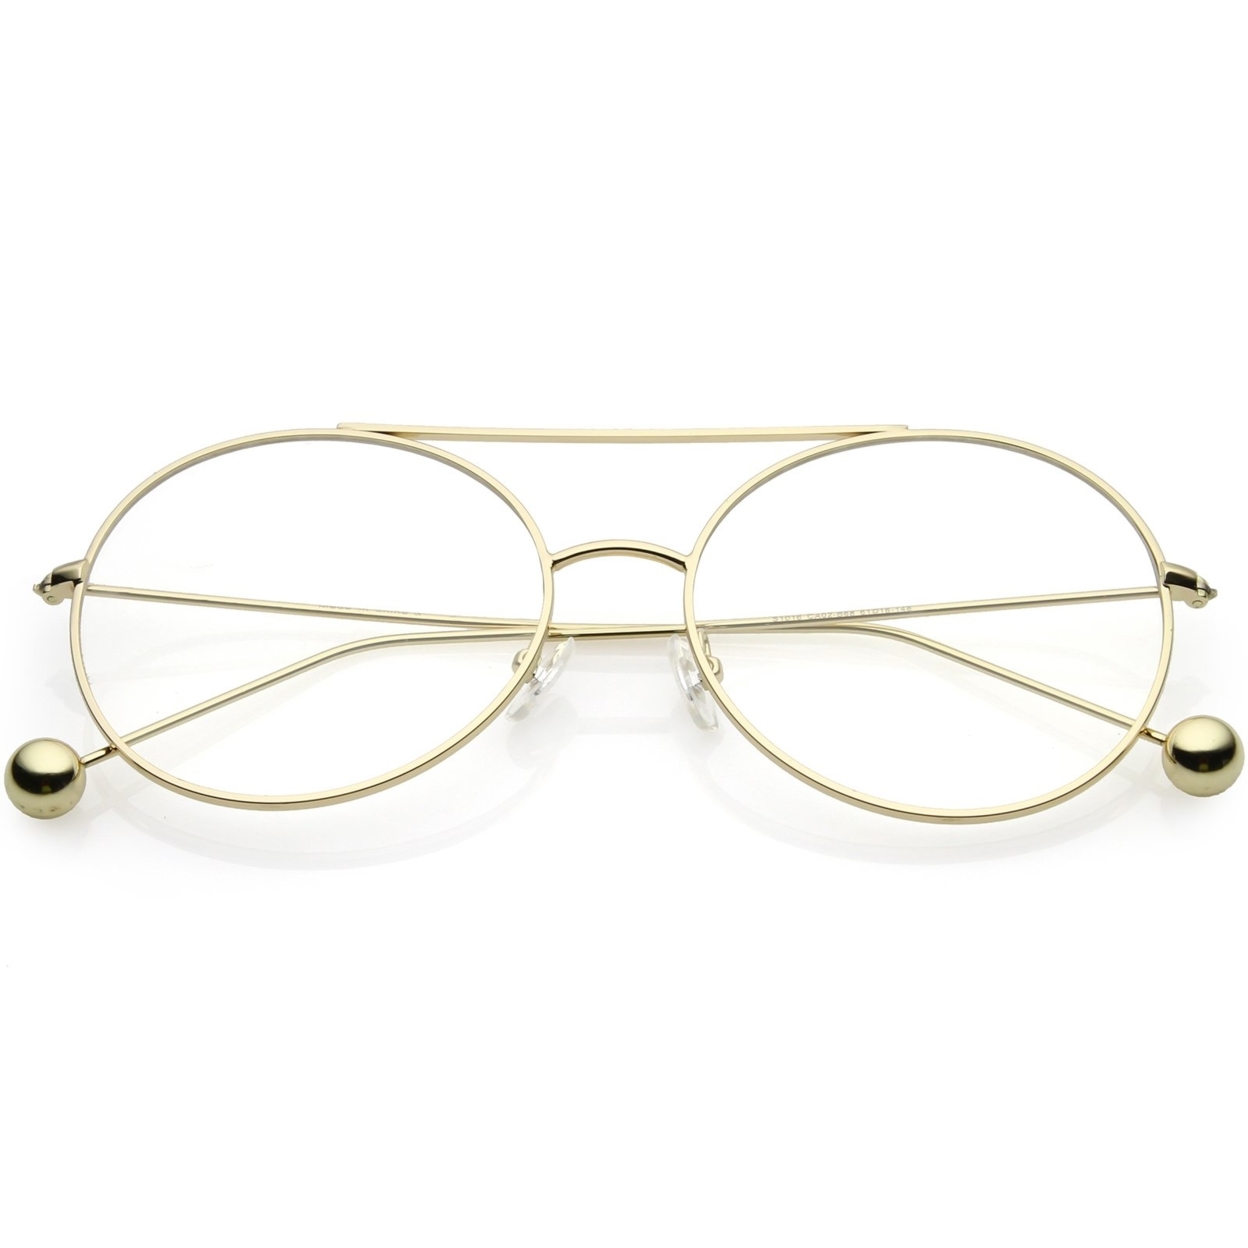 Premium Oversize Round Eyeglasses Metal Double Nose Bridge Clear Flat Lens 59mm - Silver / Clear